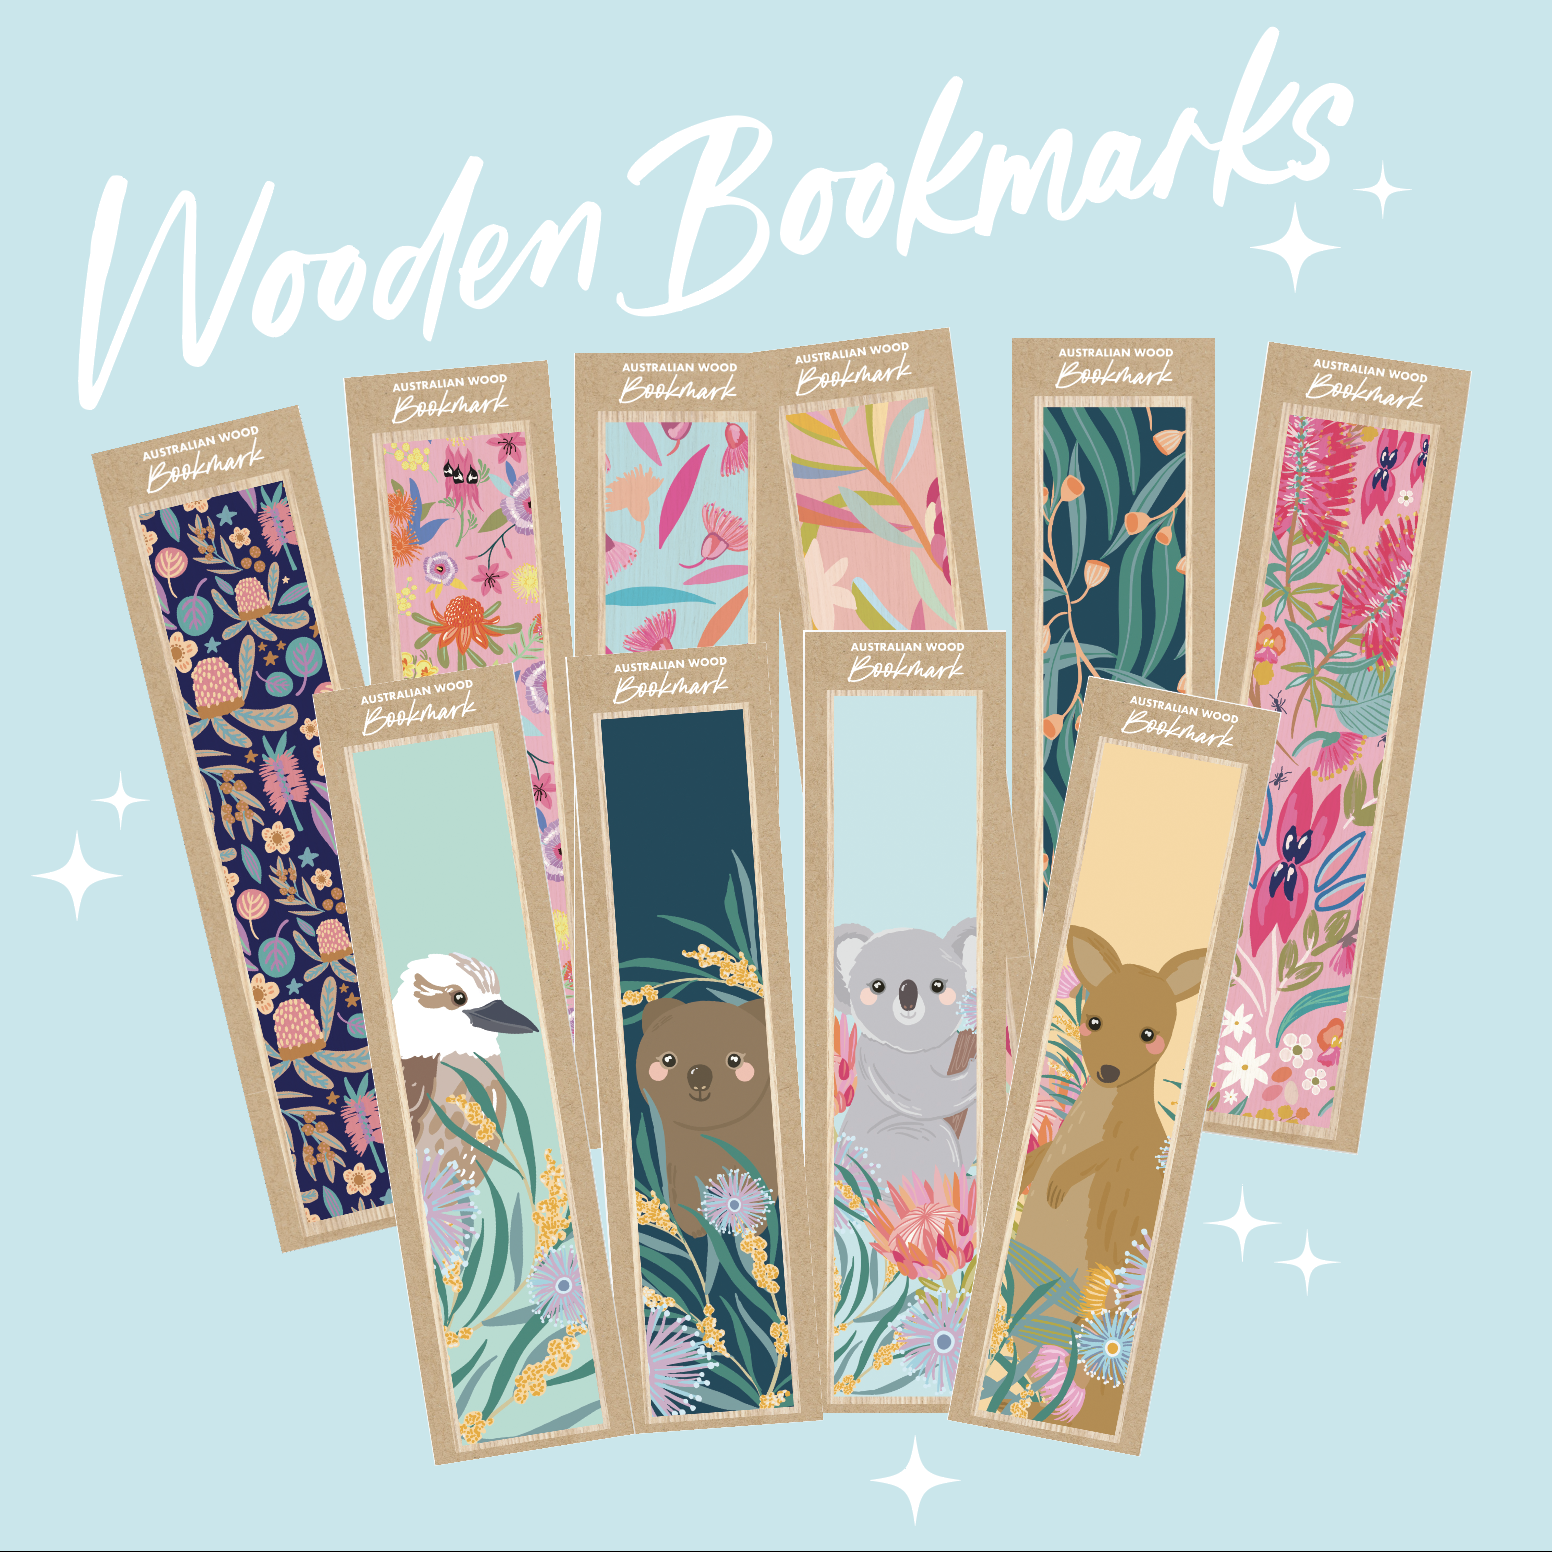 Aero Wooden Bookmarks